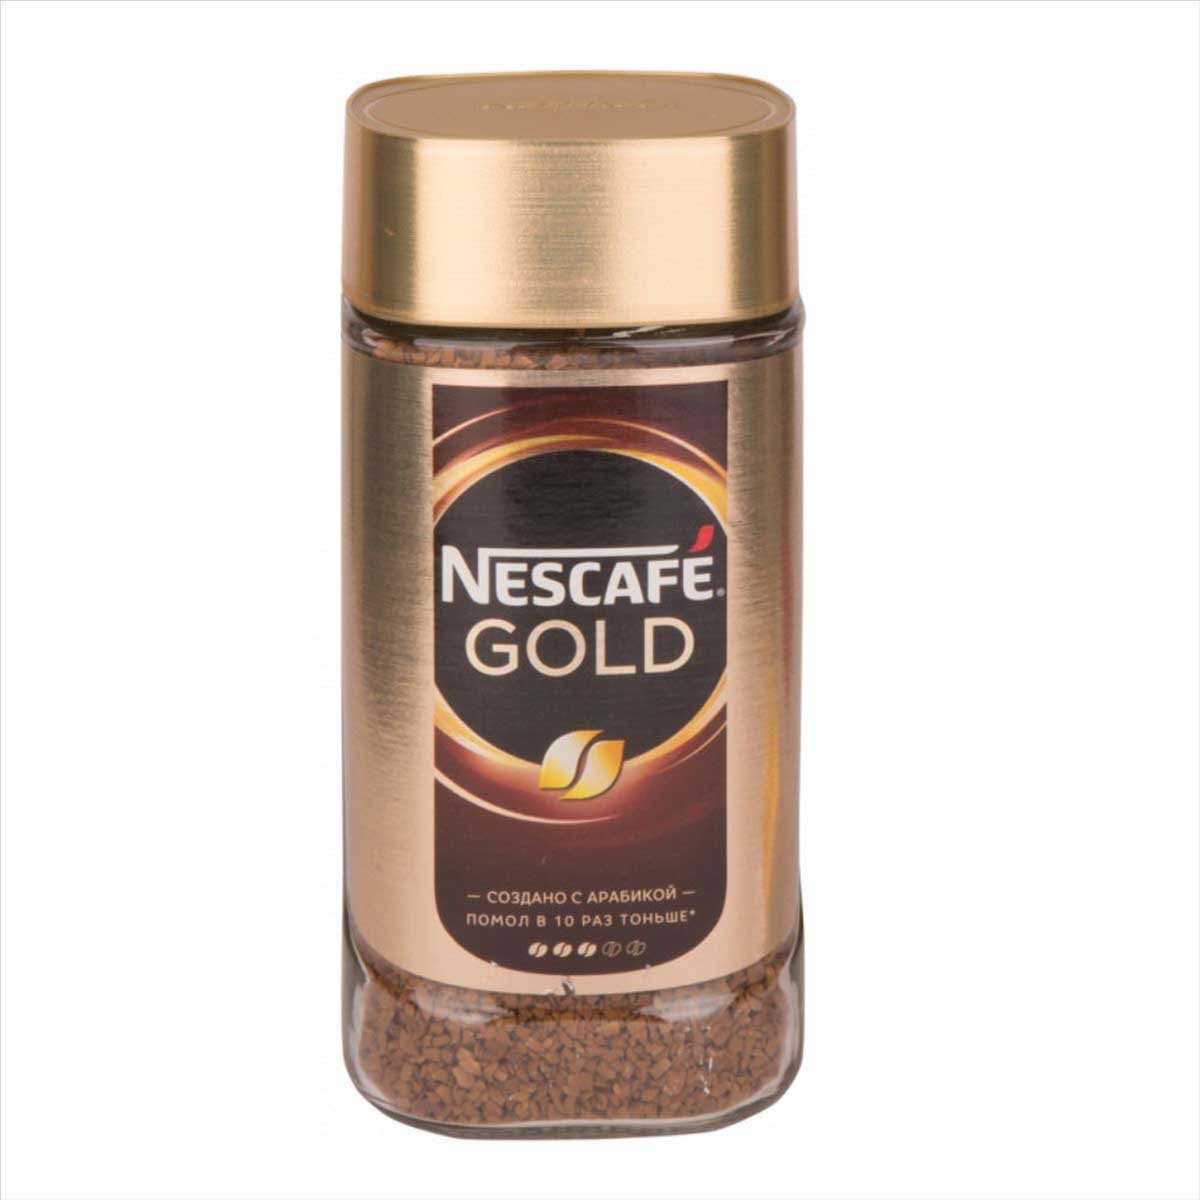 Nescafe gold 190 г. Кофе Нескафе Голд 190г ст/б. Кофе Нескафе Голд 95 ст/б. Кофе растворимый Нескафе Голд 190г. Кофе "Nescafe" Голд 190г.